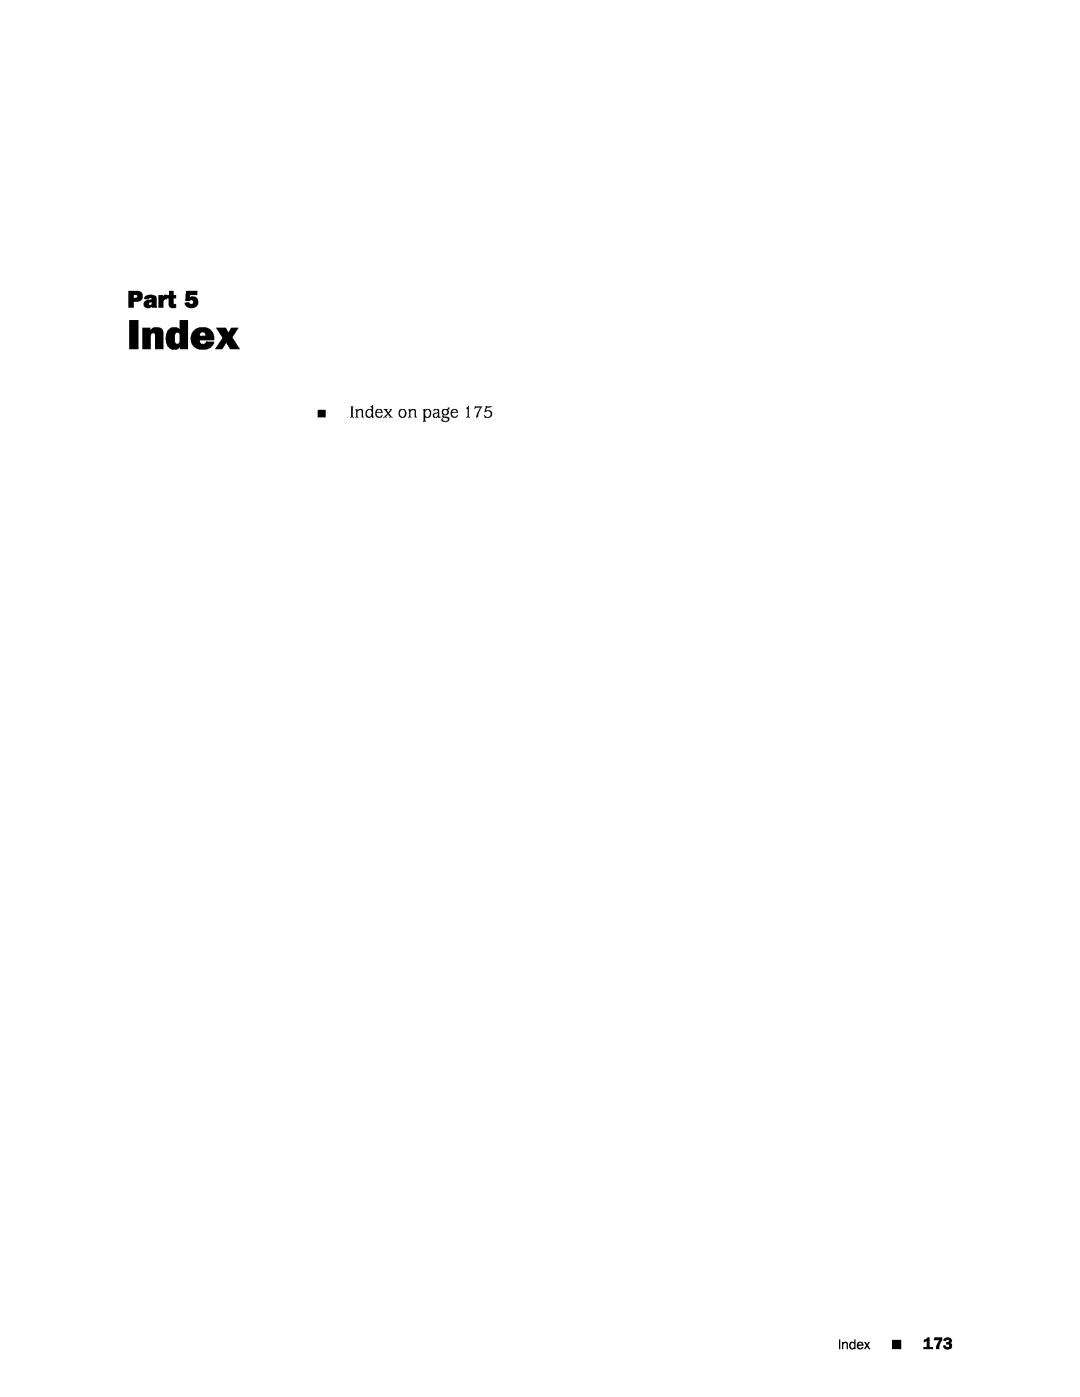 Juniper Networks SRX 210 manual Part, Index on page 